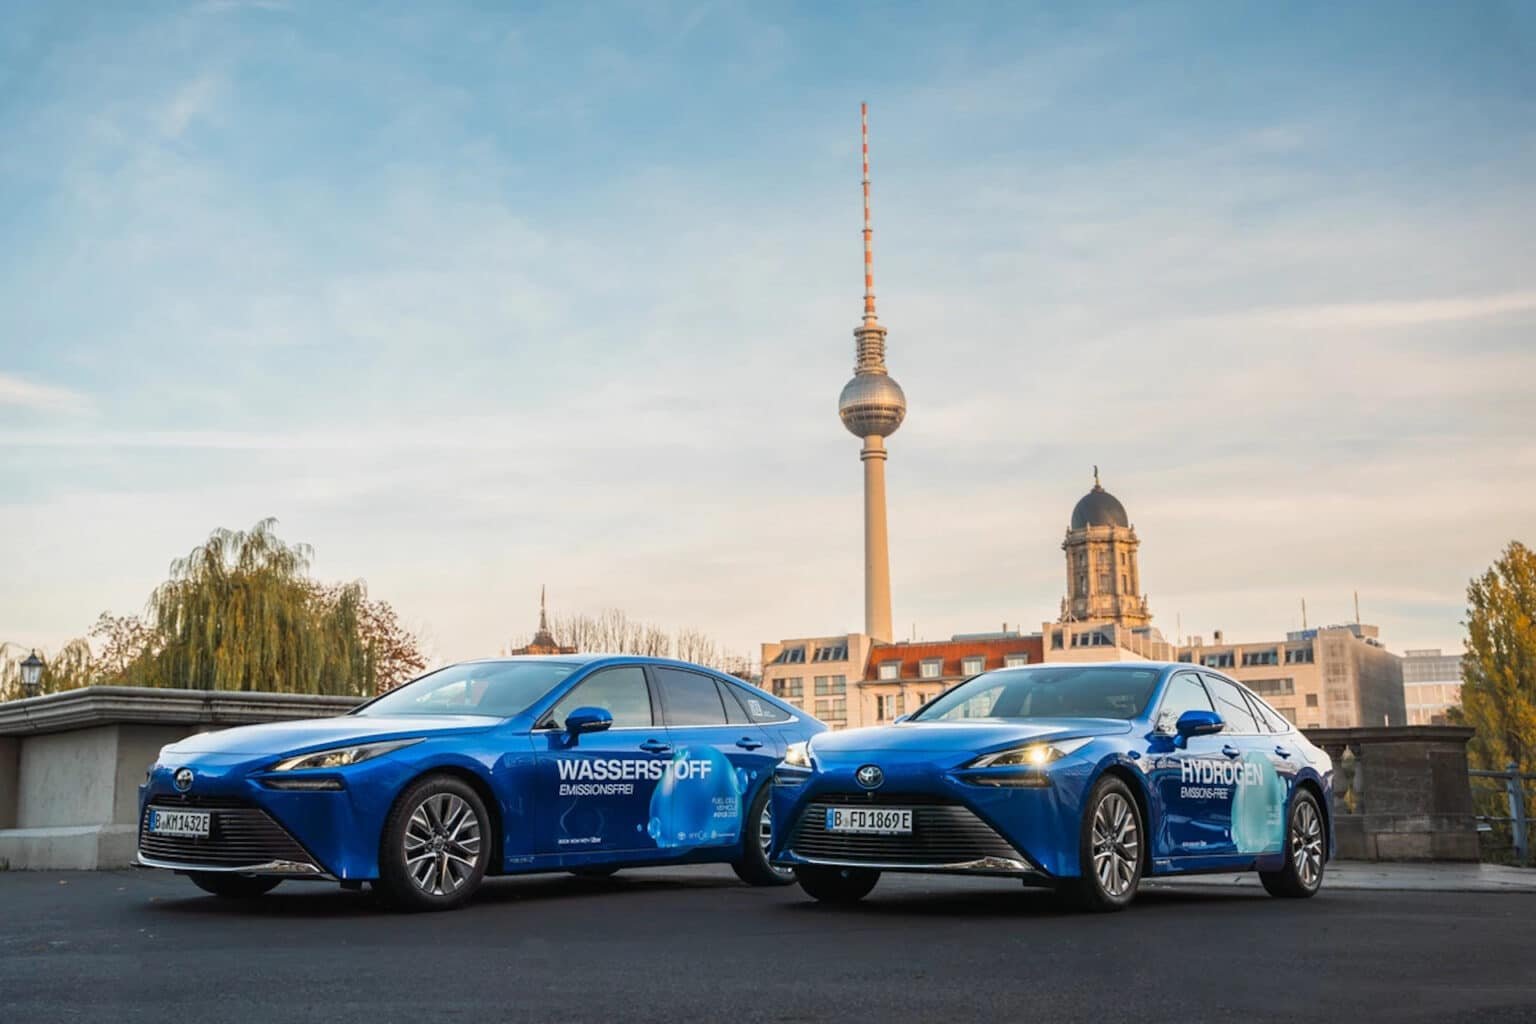 Toyota-Wasserstoff-Taxi-Berlin